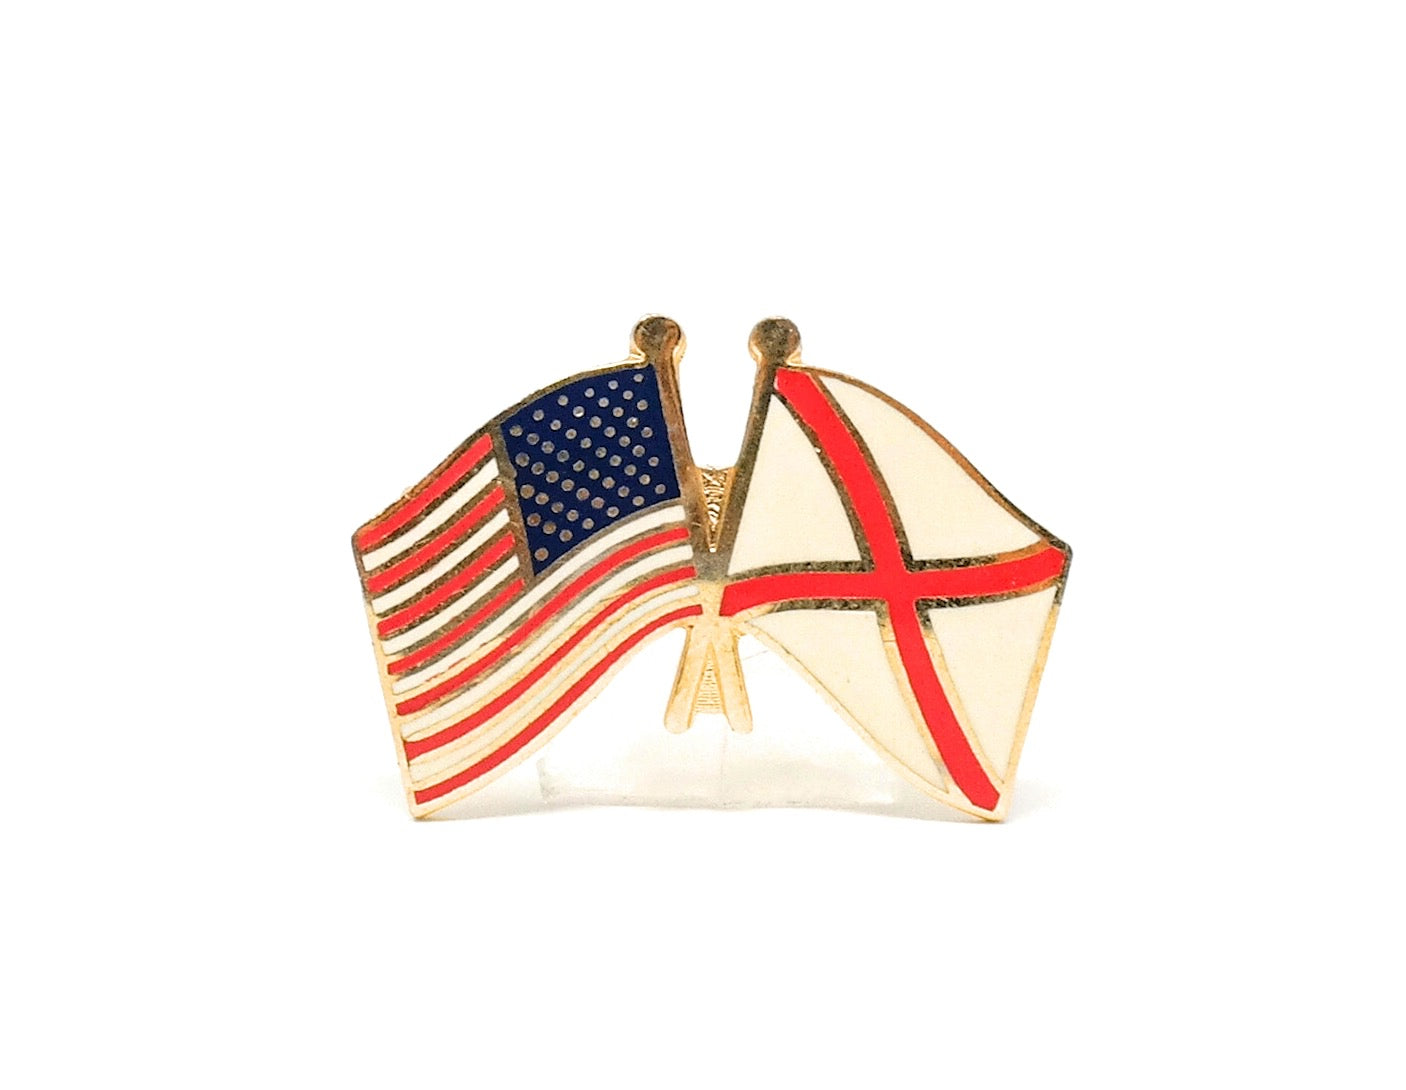 Alabama State & USA Friendship Flags Lapel Pin